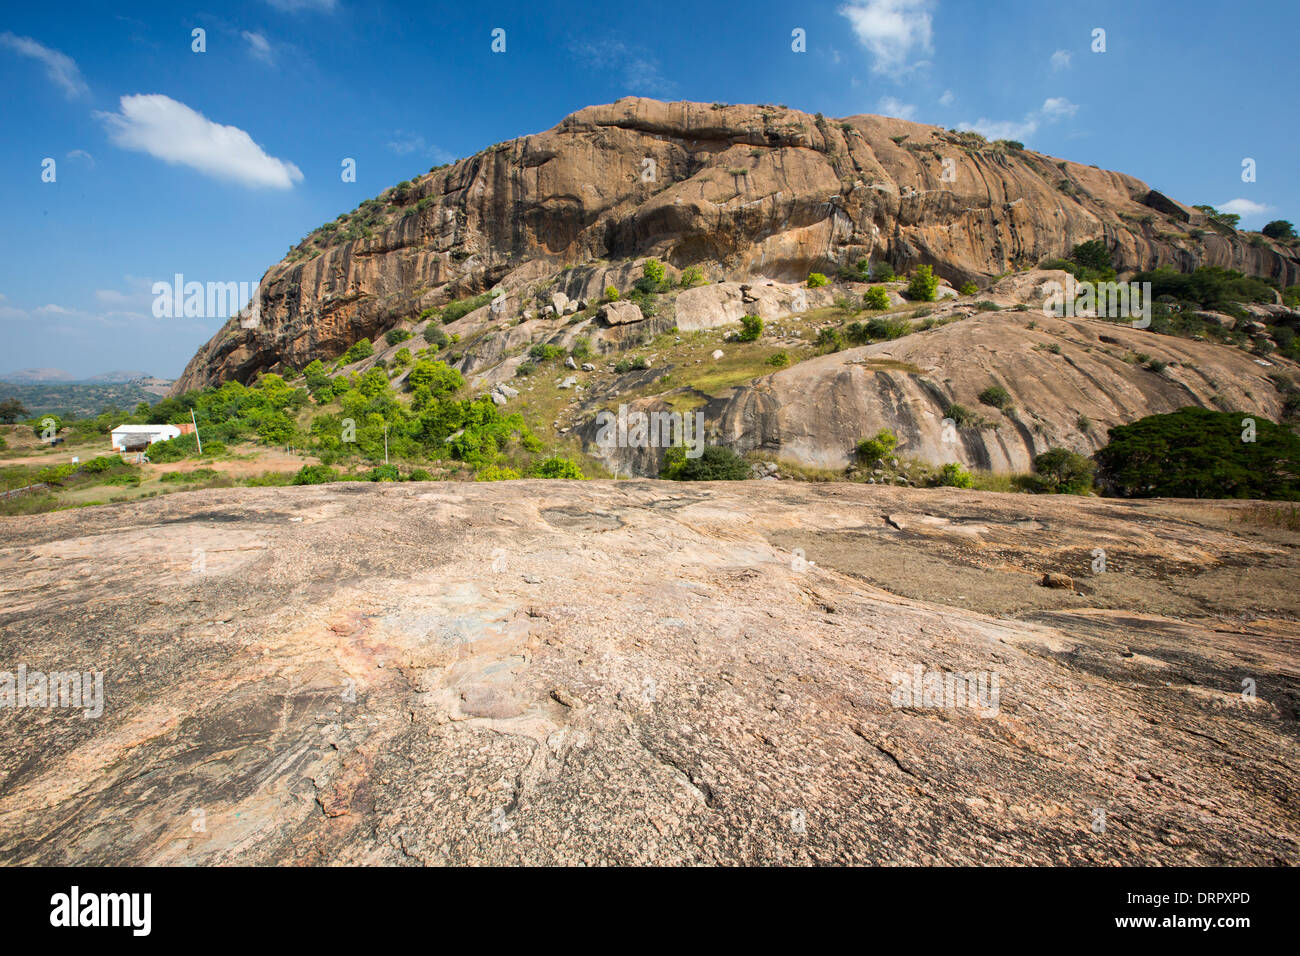 A Granite peak in the Western ghats near Bangalore in the State of Karnataka, India, Stock Photo